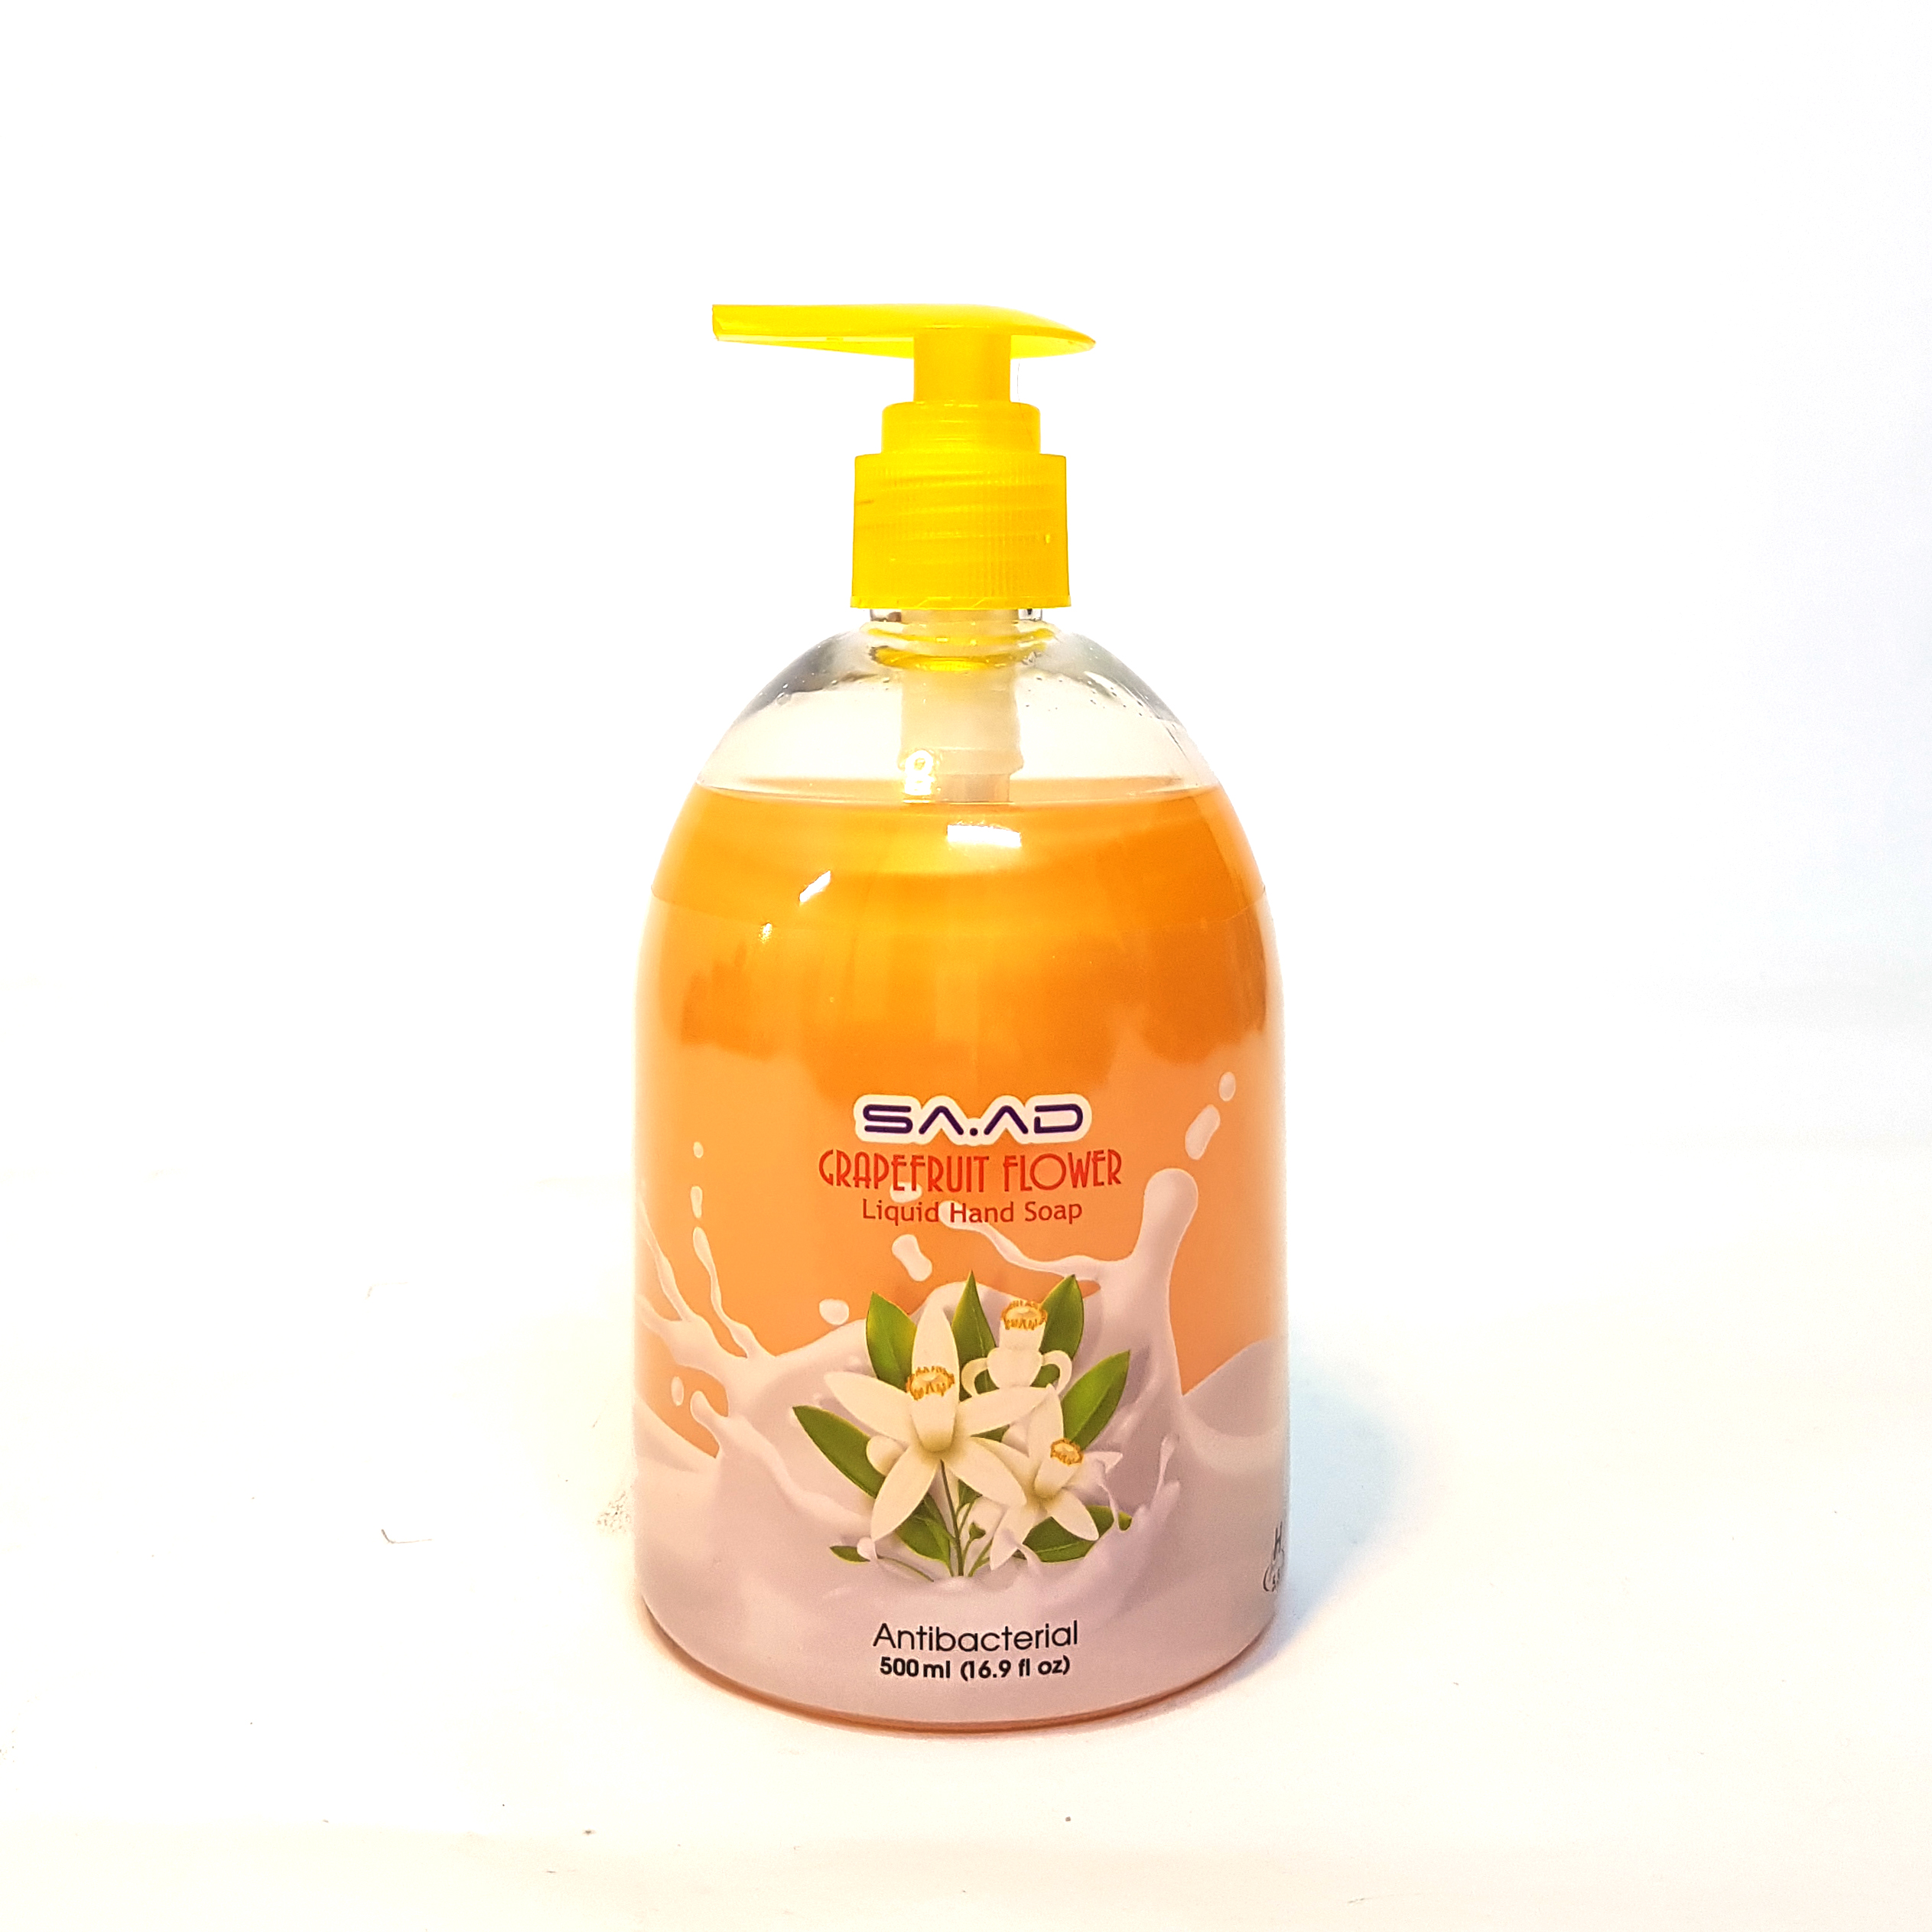 SAAD GRAPEFRUIT FLOWER LIQUID HAND SOAP -01